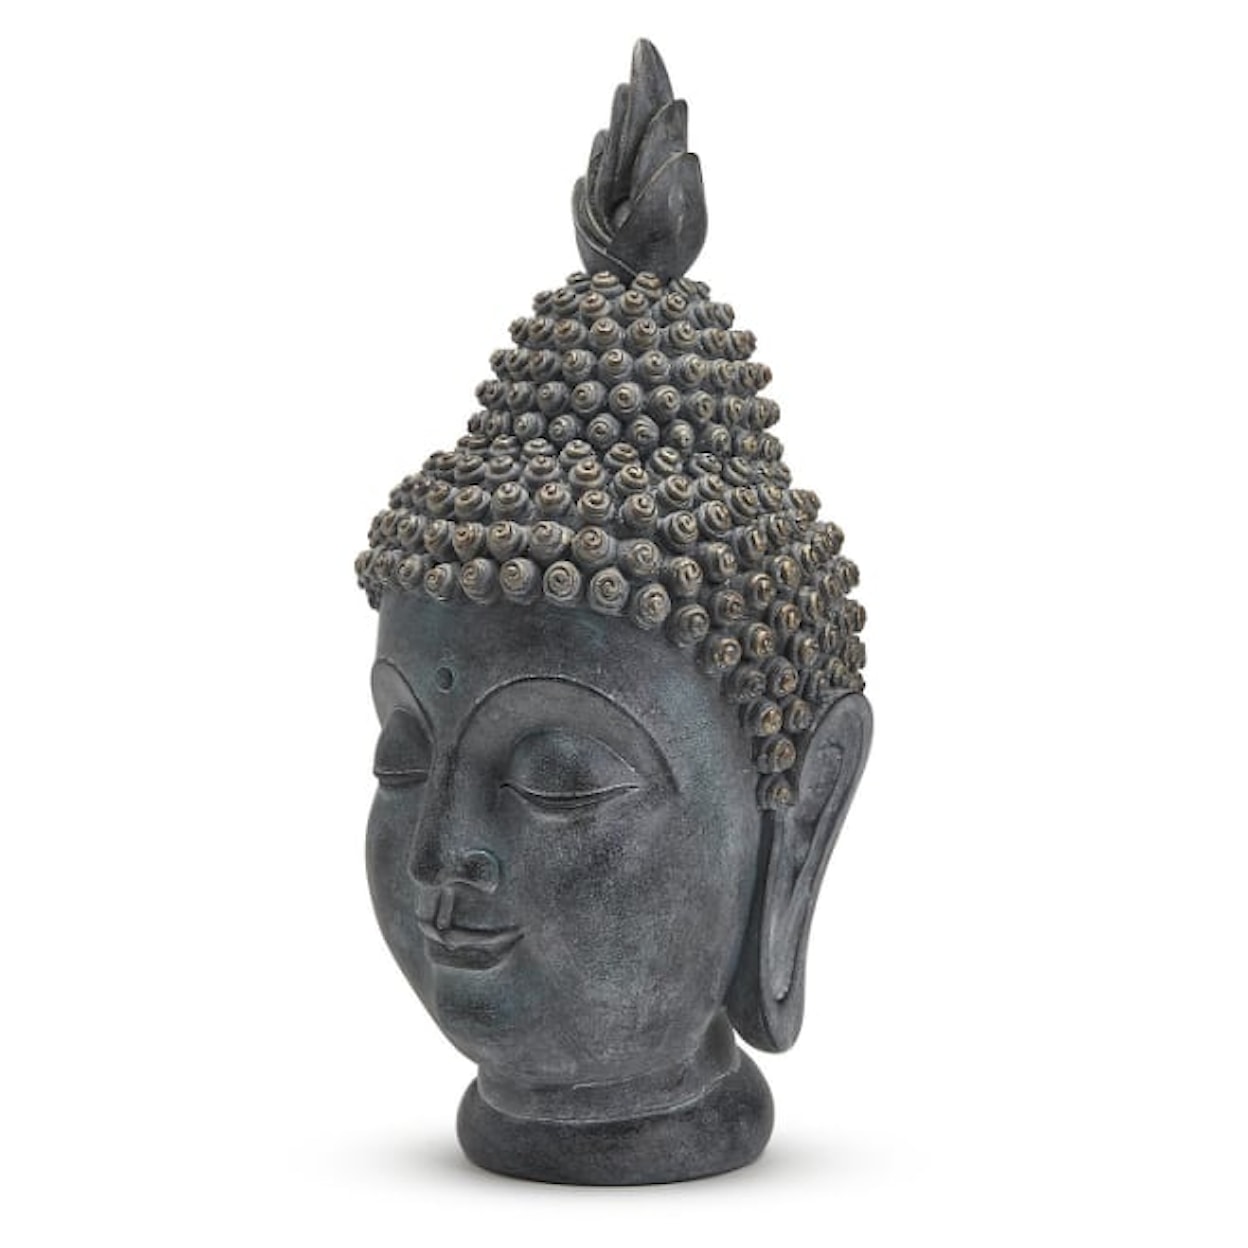 Two's Company Natural Living Meditating Buddha Head Statue